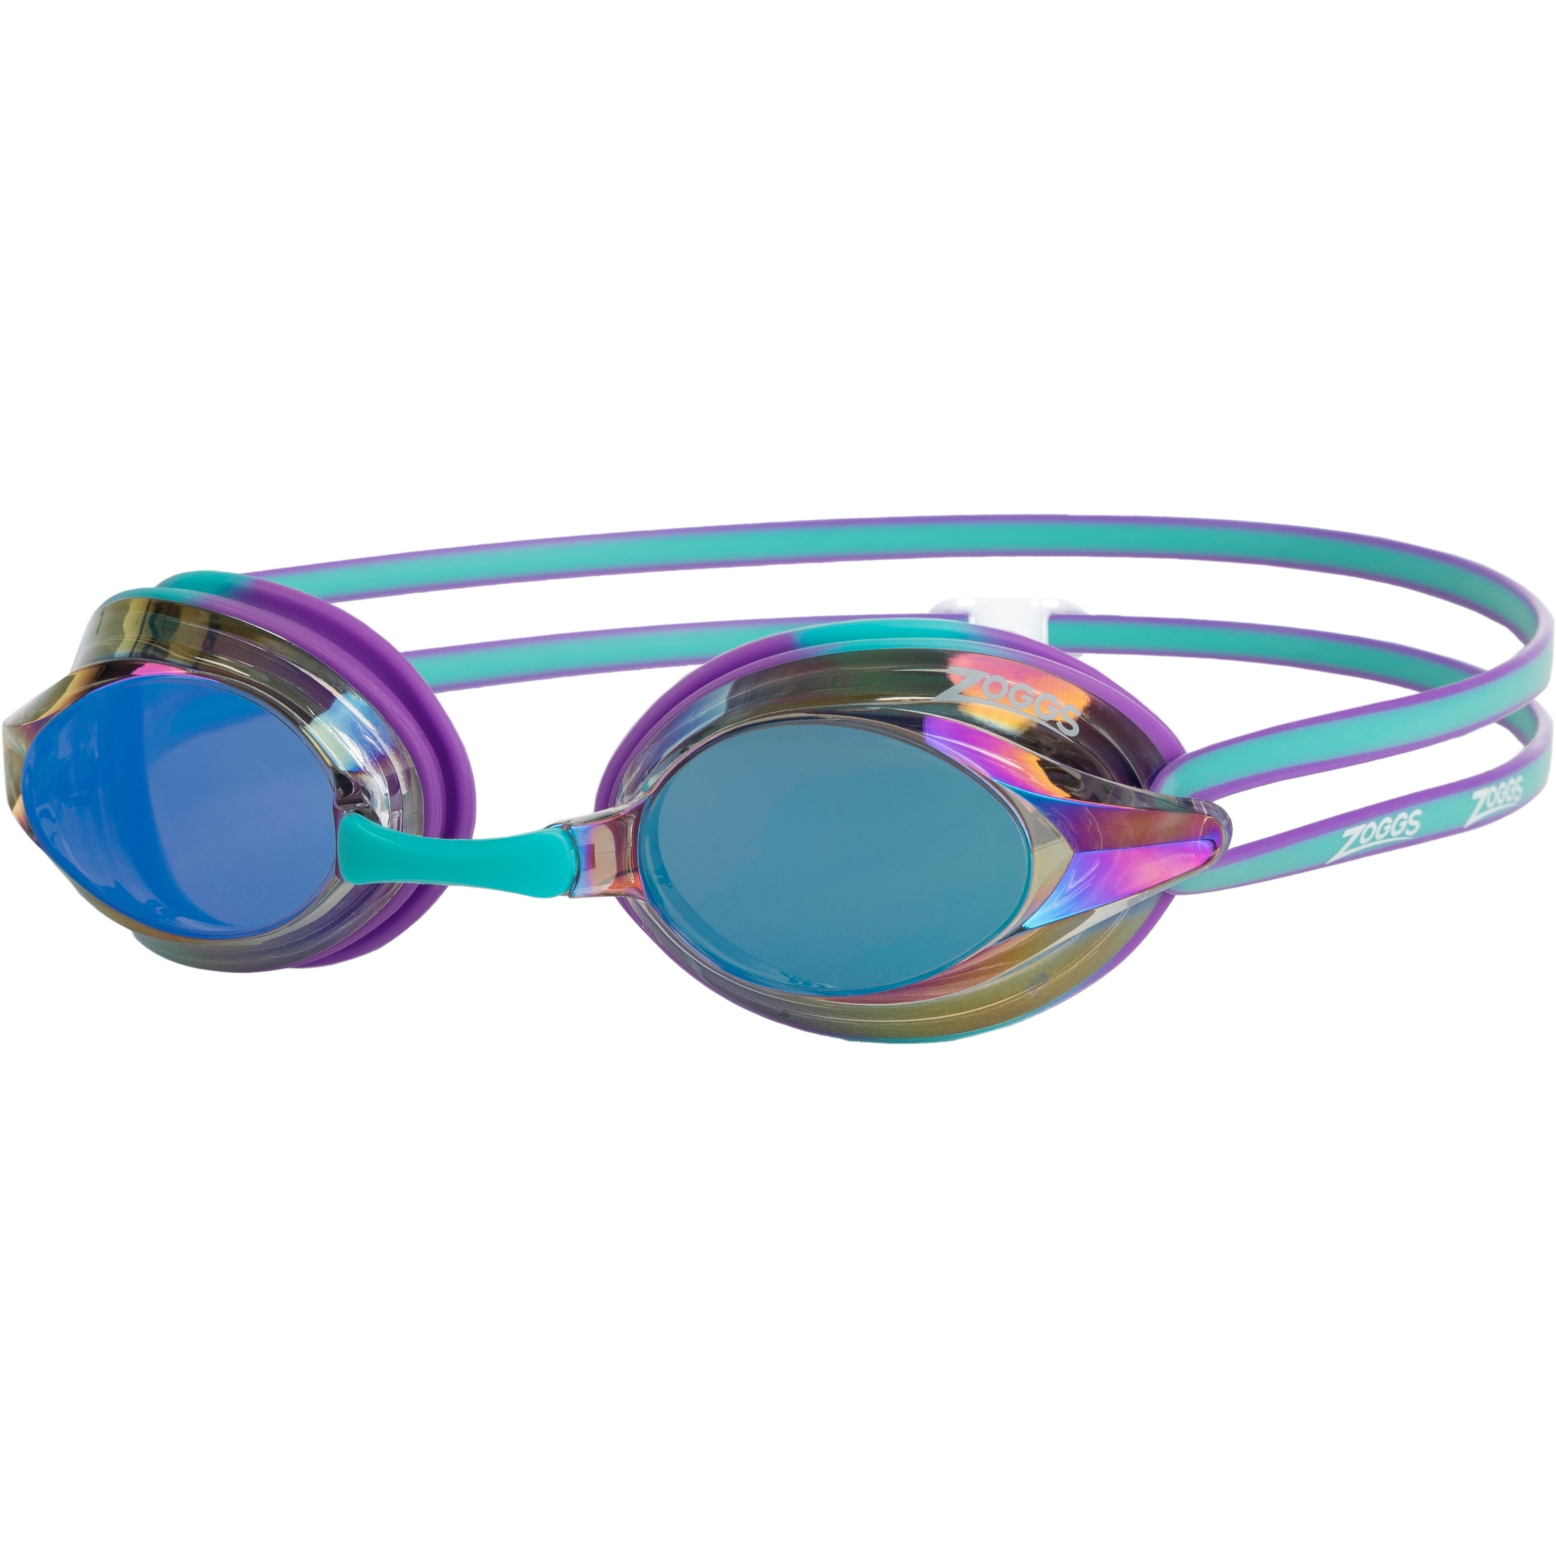 Picture of Zoggs Racer Titanium Swimming Goggles - Mirror Blue Lenses - Violet/Turqoise